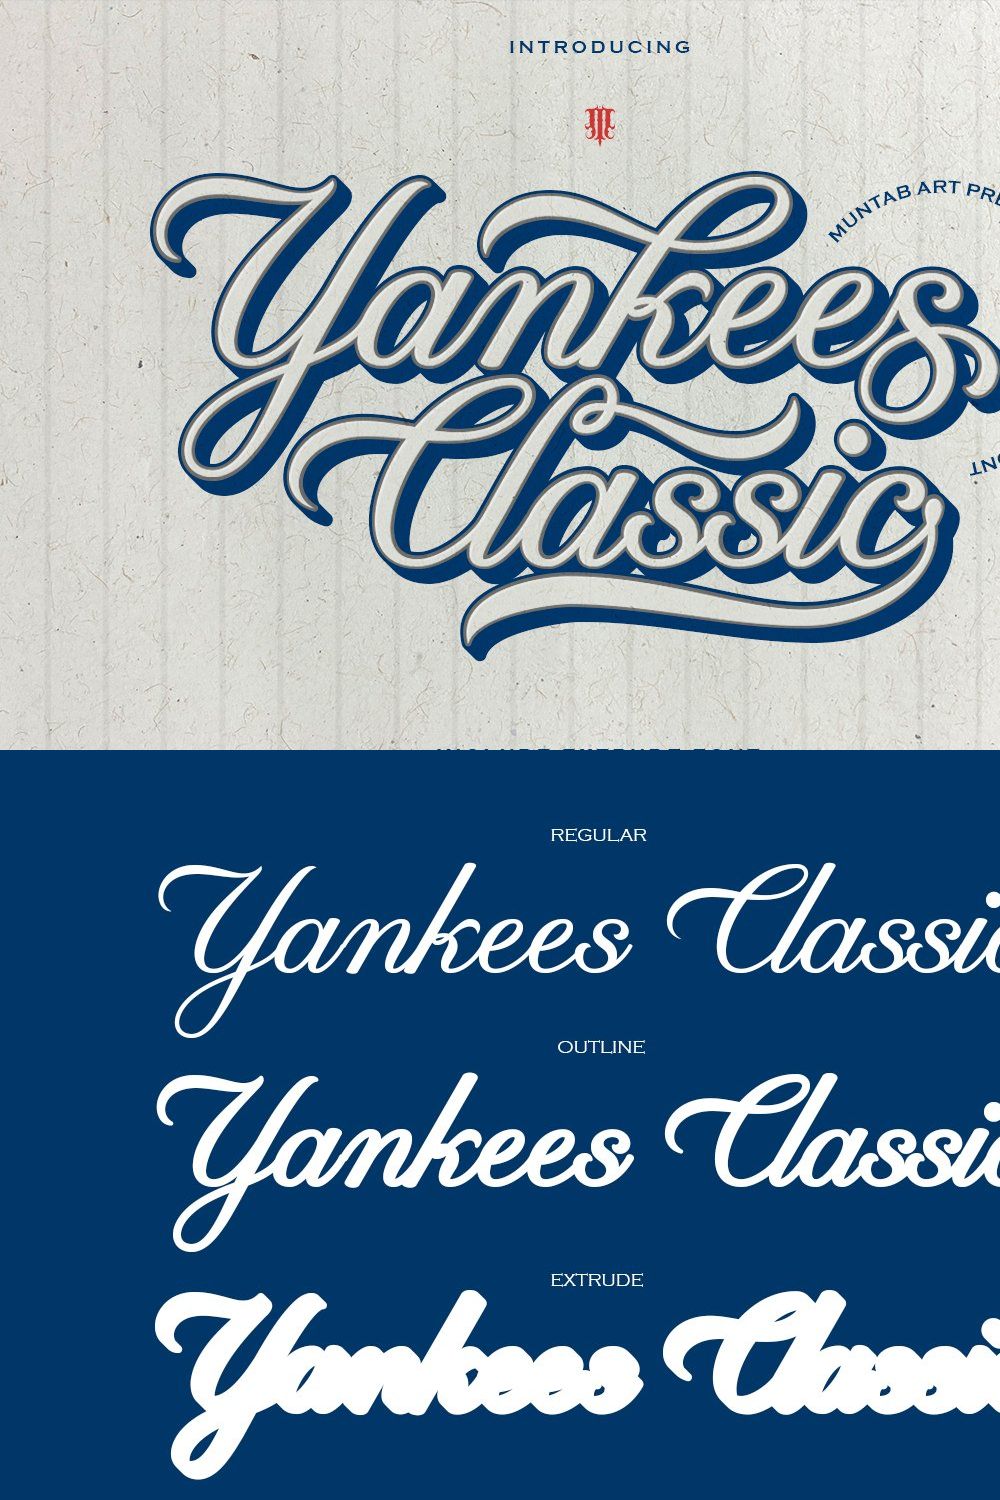 Yankees Classic | Athletics Font pinterest preview image.